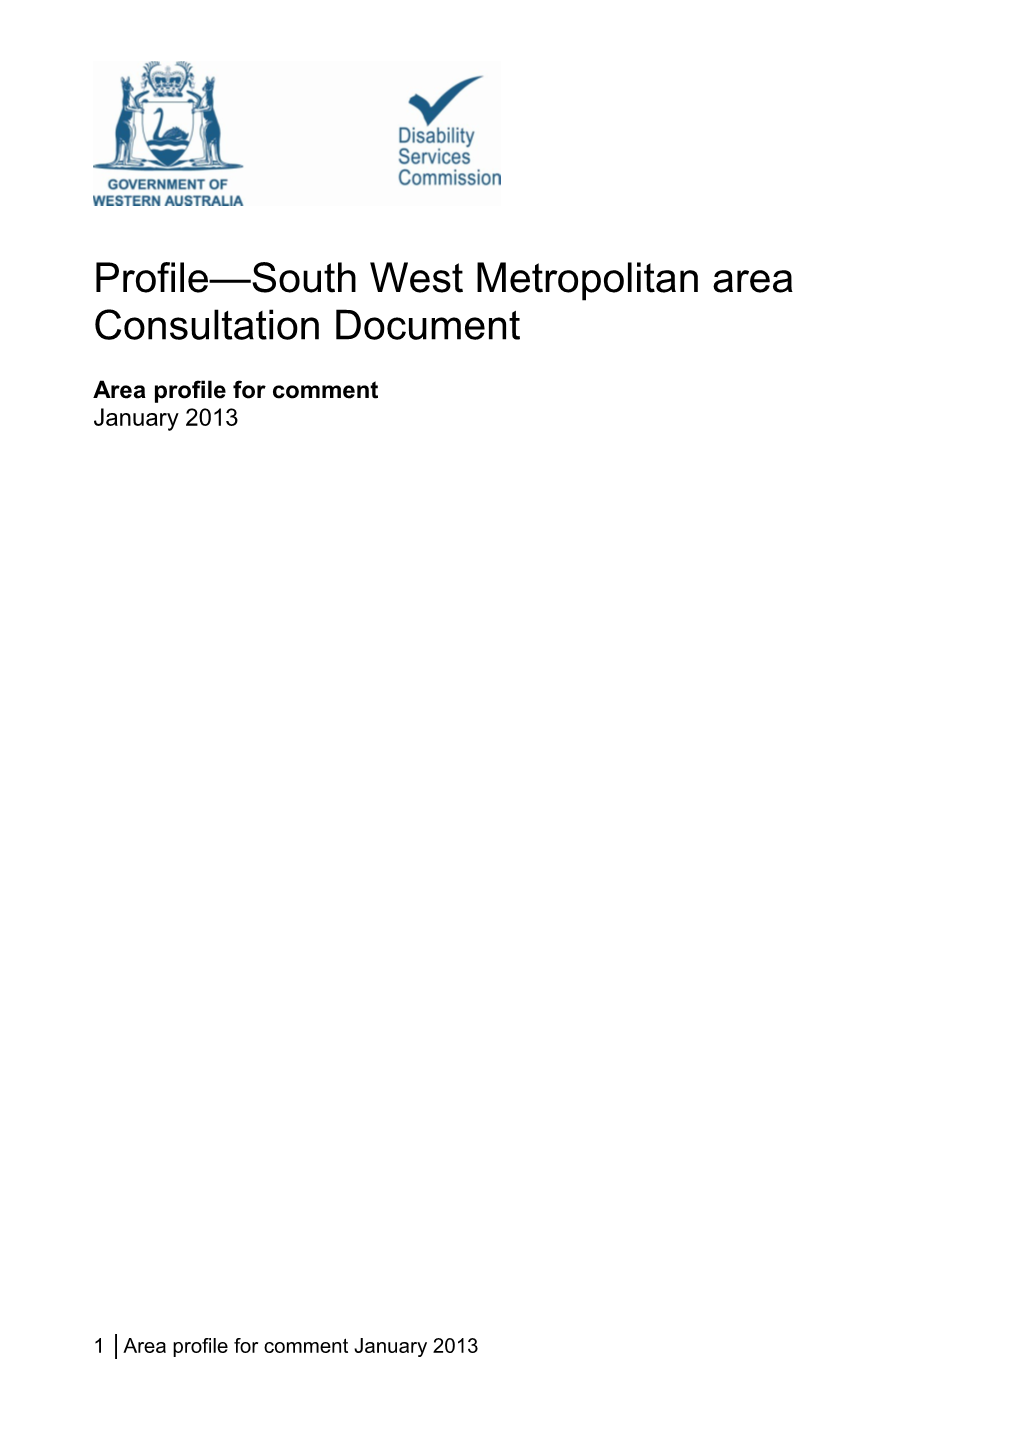 South West Metropolitan Area Profile Consultation Document - Accessible